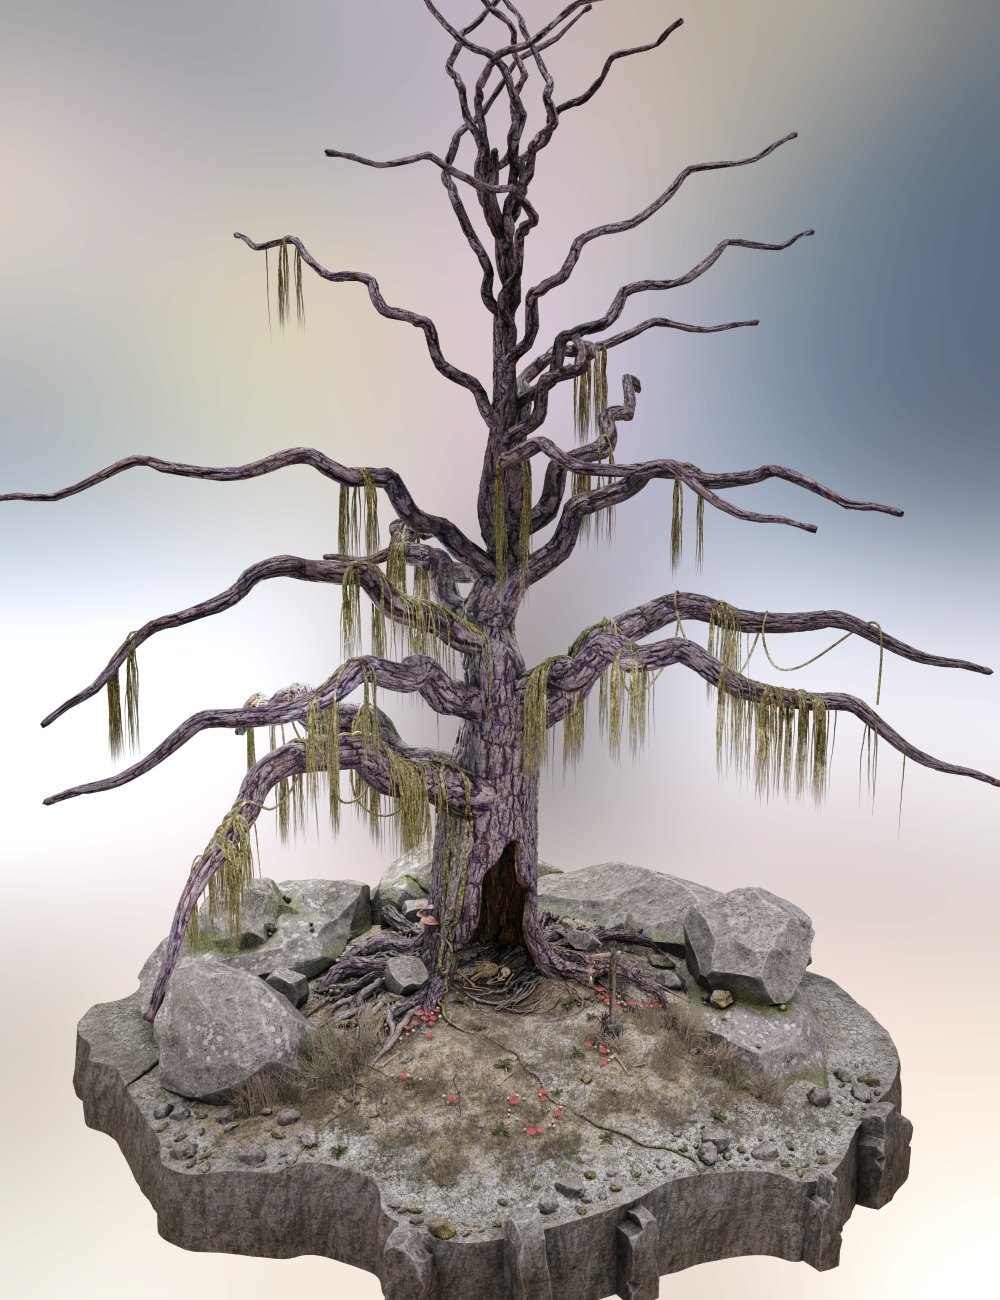 Arbor Mortis by: Merlin Studios, 3D Models by Daz 3D